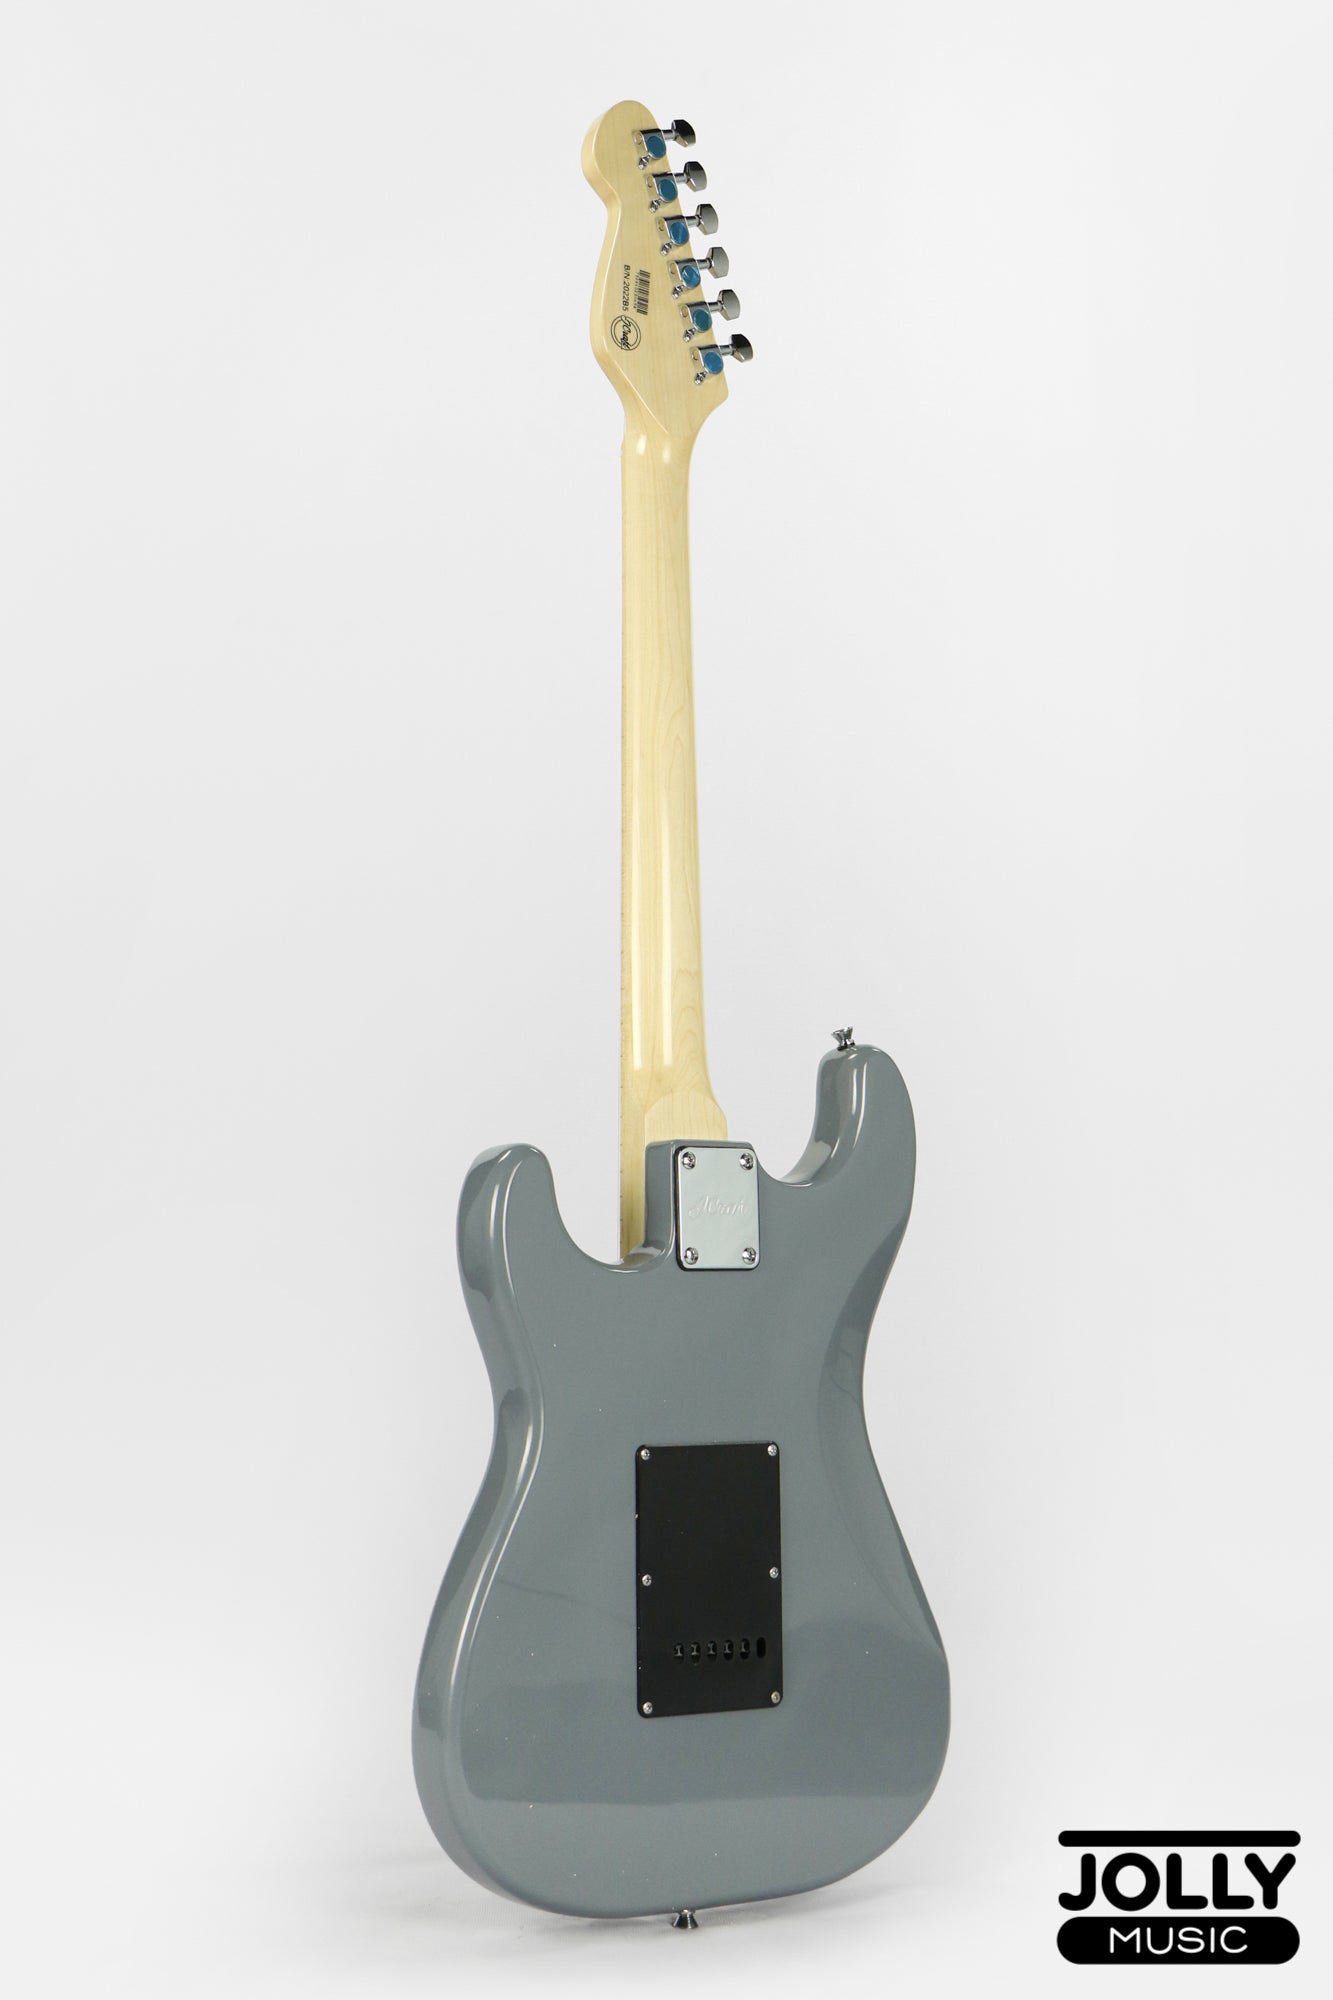 JCraft S-2H HSS S-Style Electric Guitar - Maple / Gray